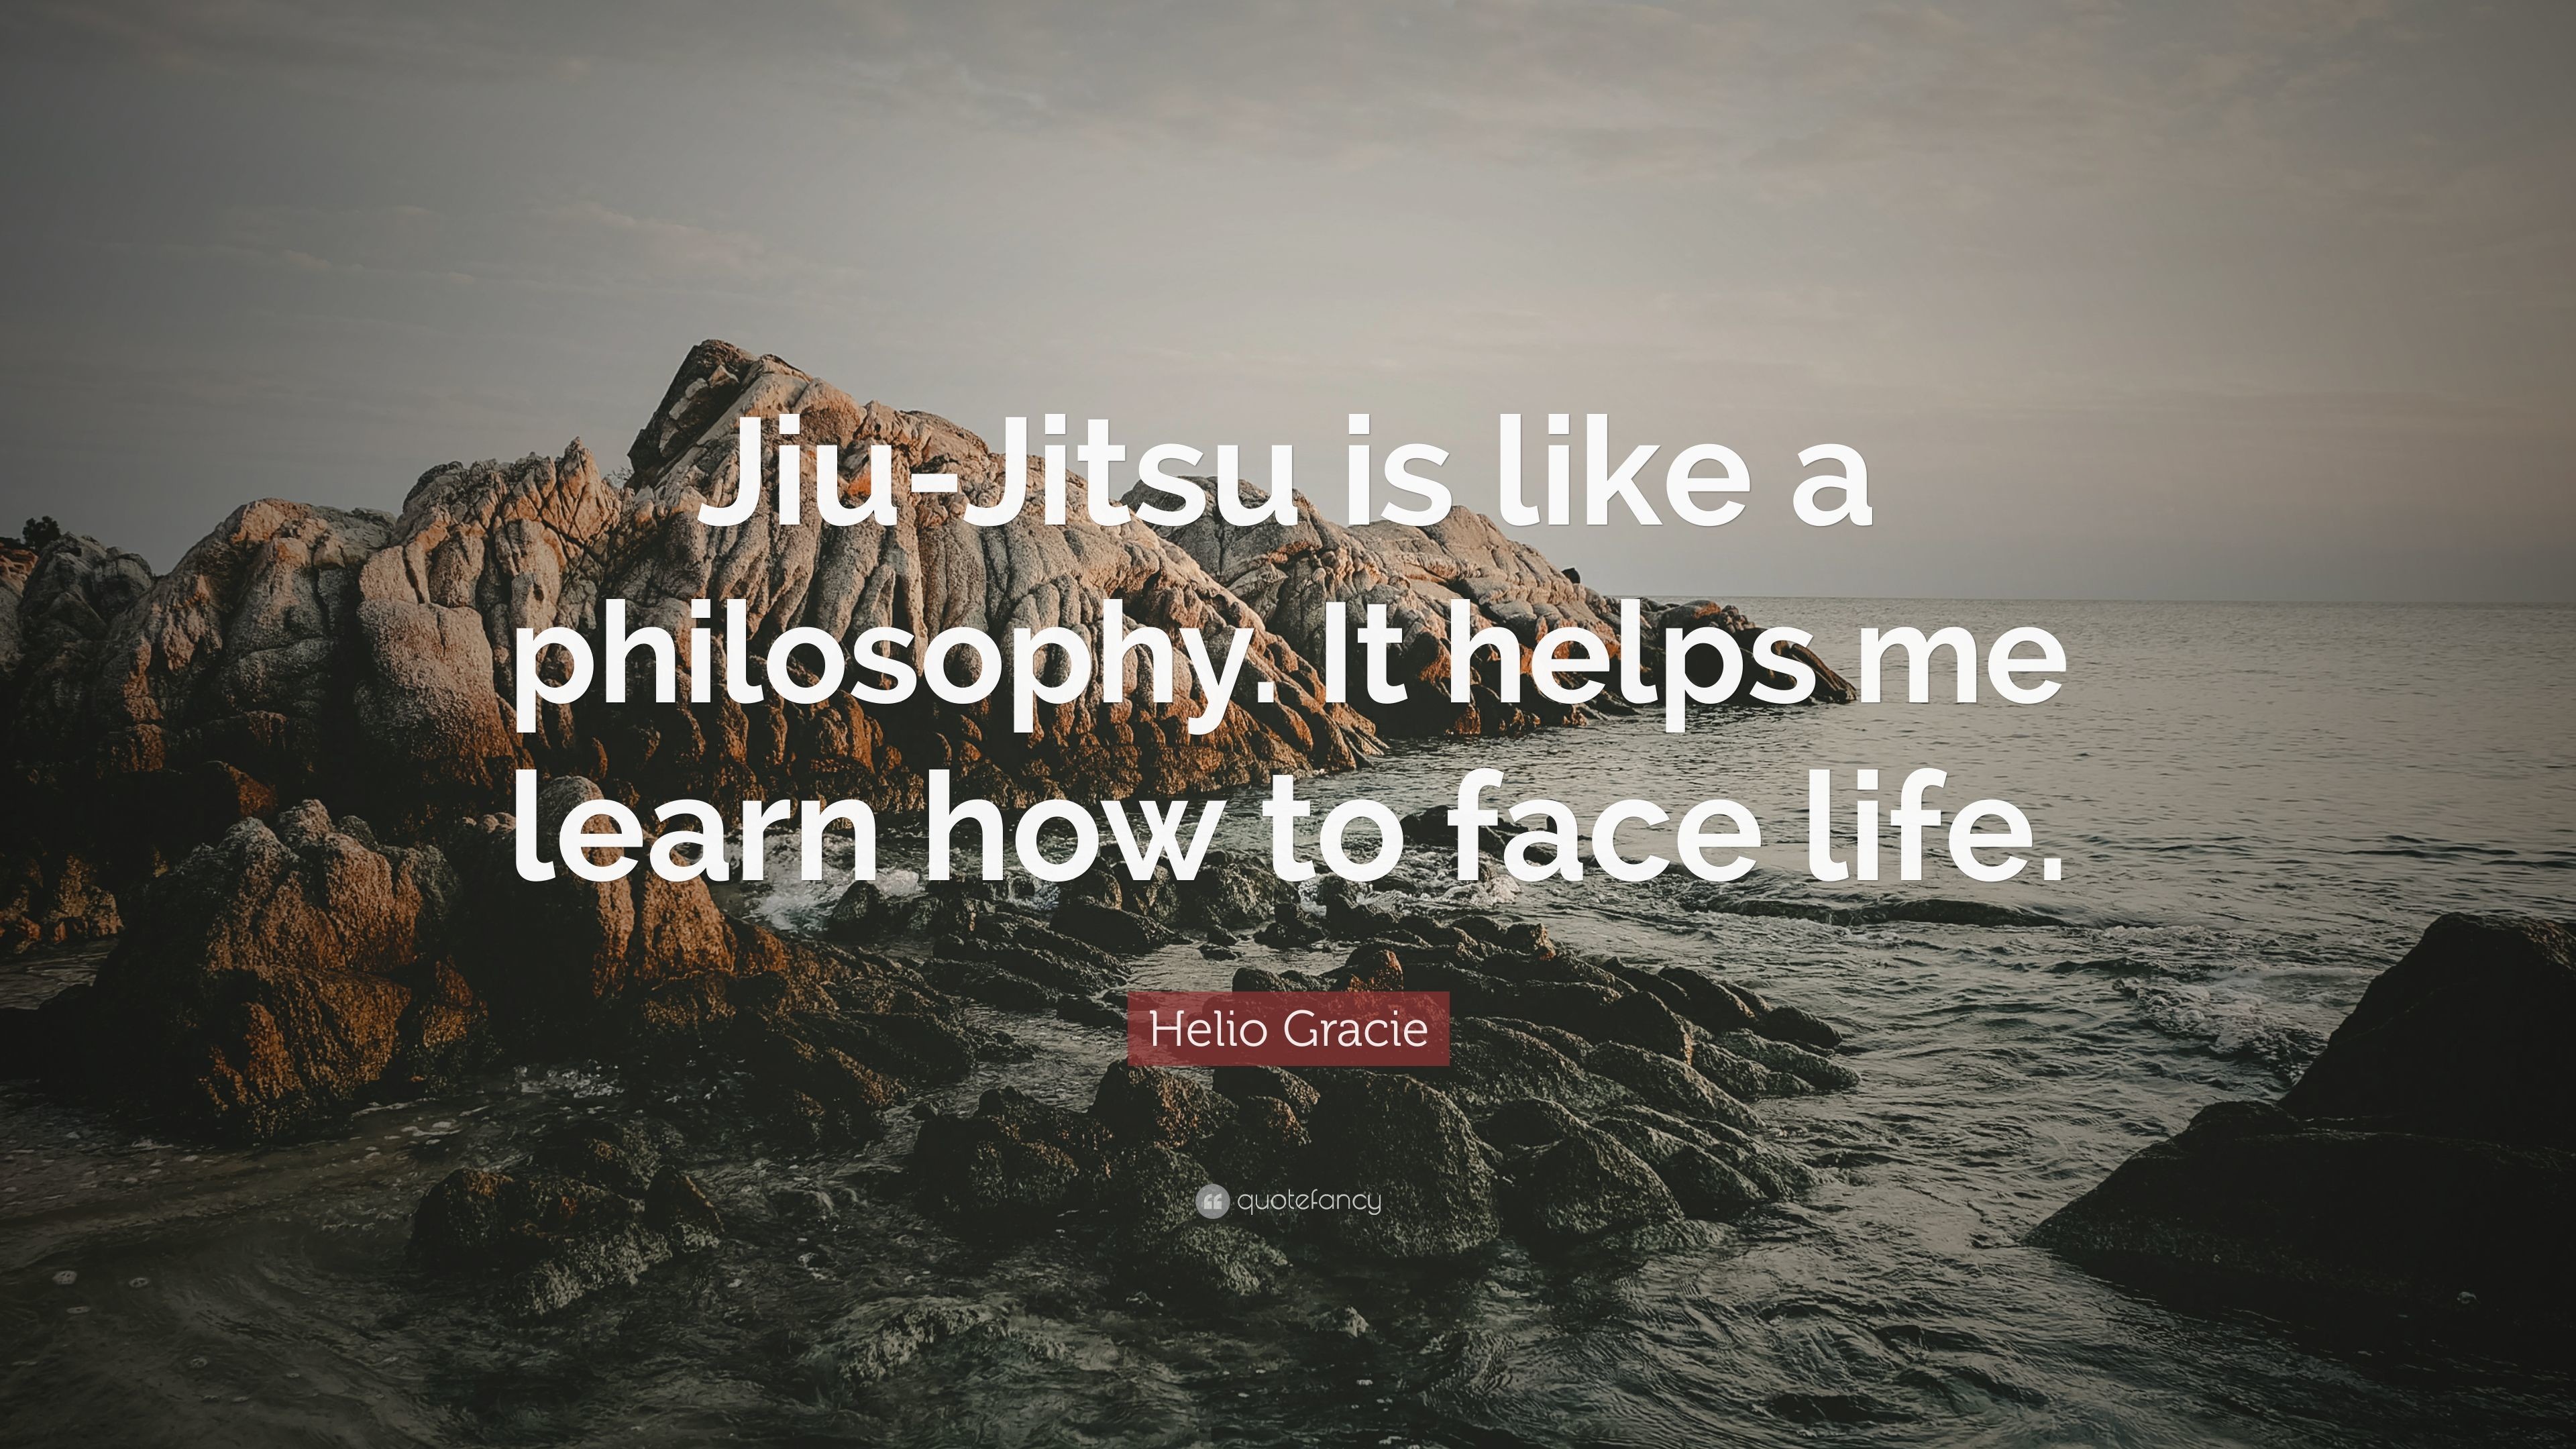 3840x2160 Helio Gracie Quote: “Jiu-Jitsu is like a philosophy. It helps me